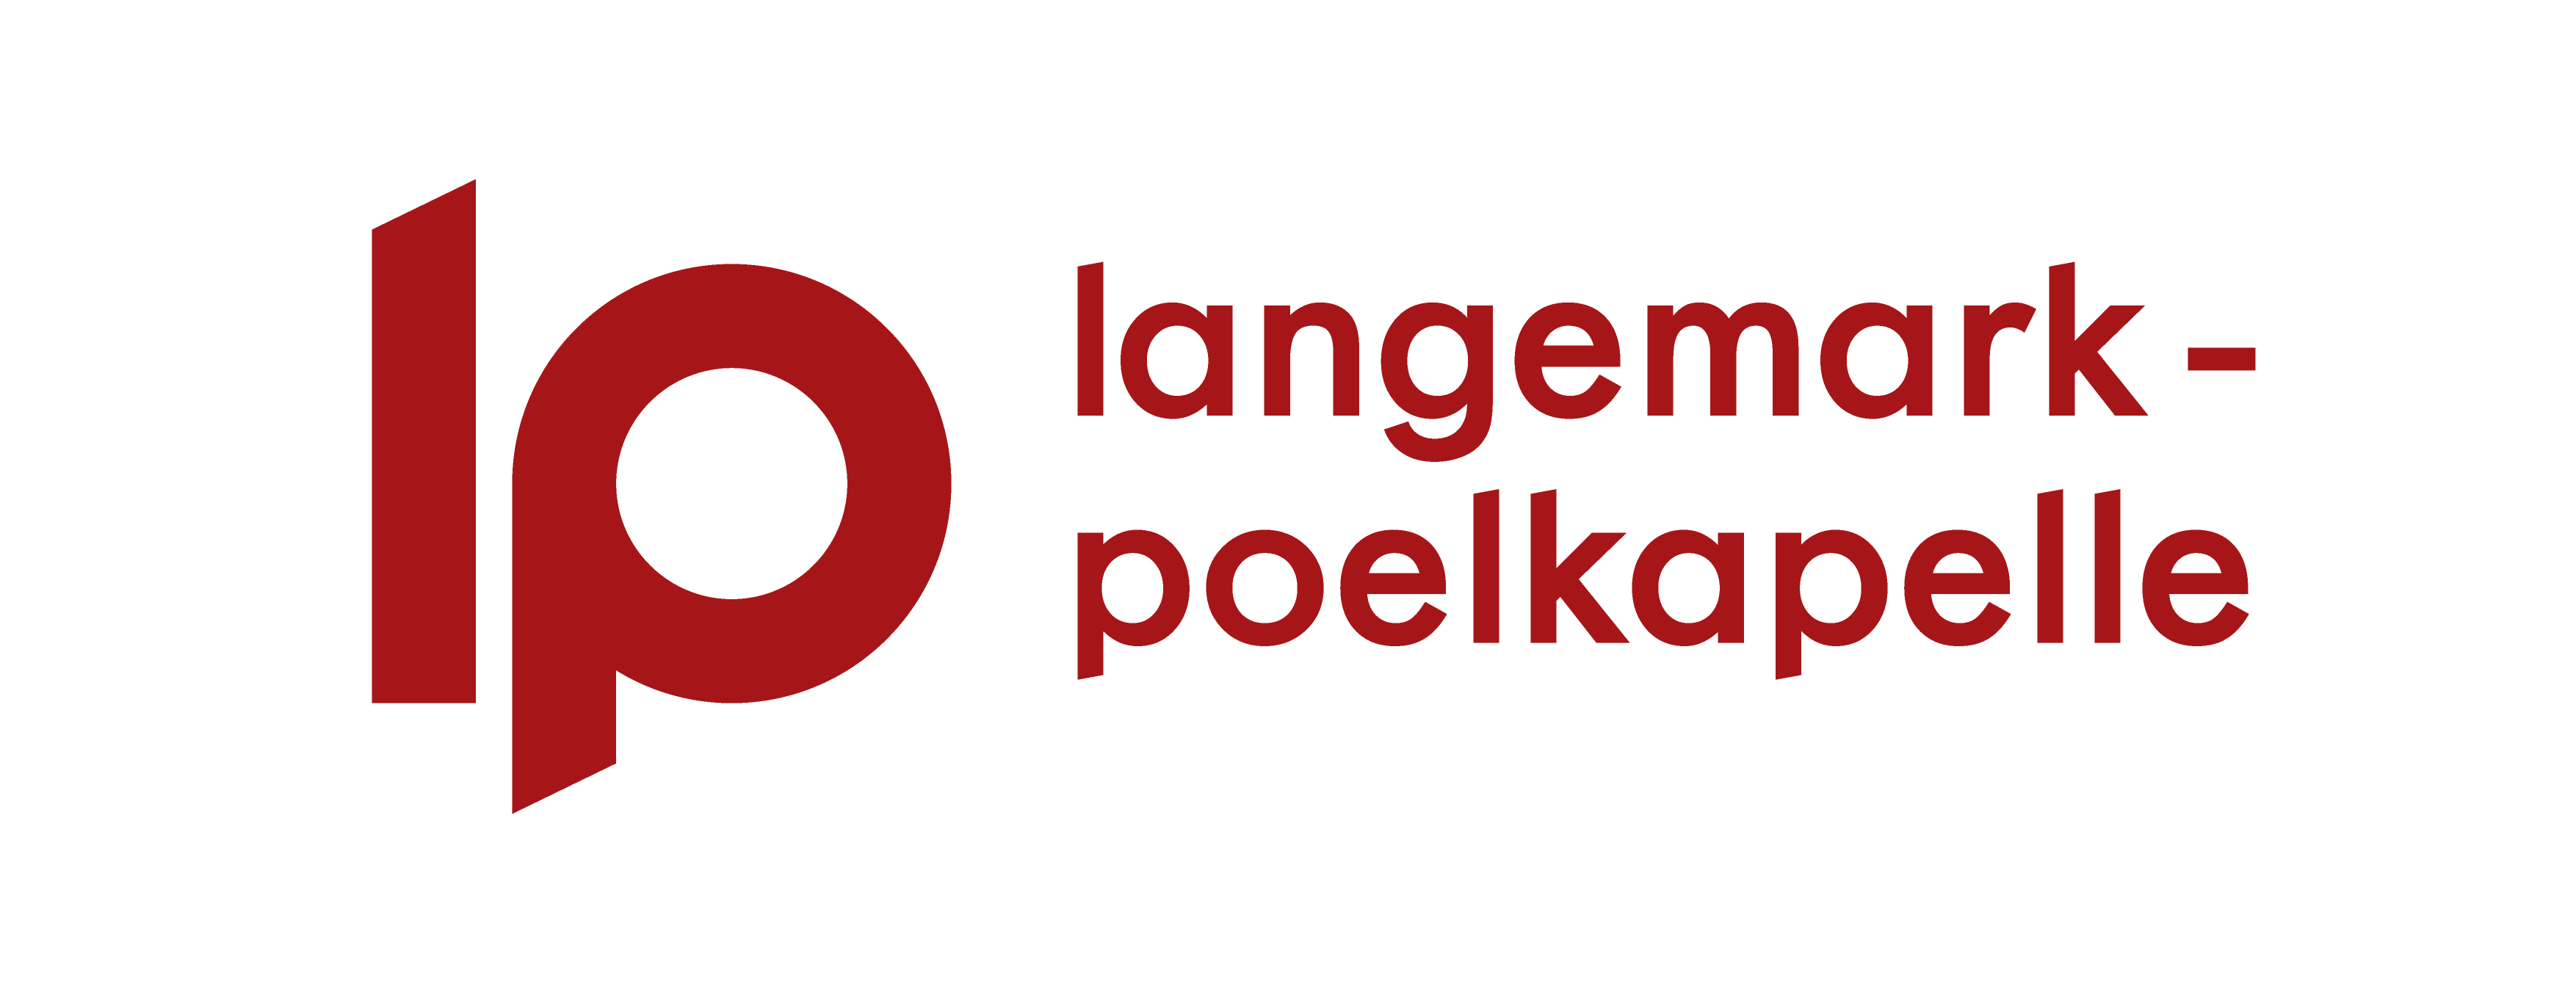 http://www.langemark-poelkapelle.be/